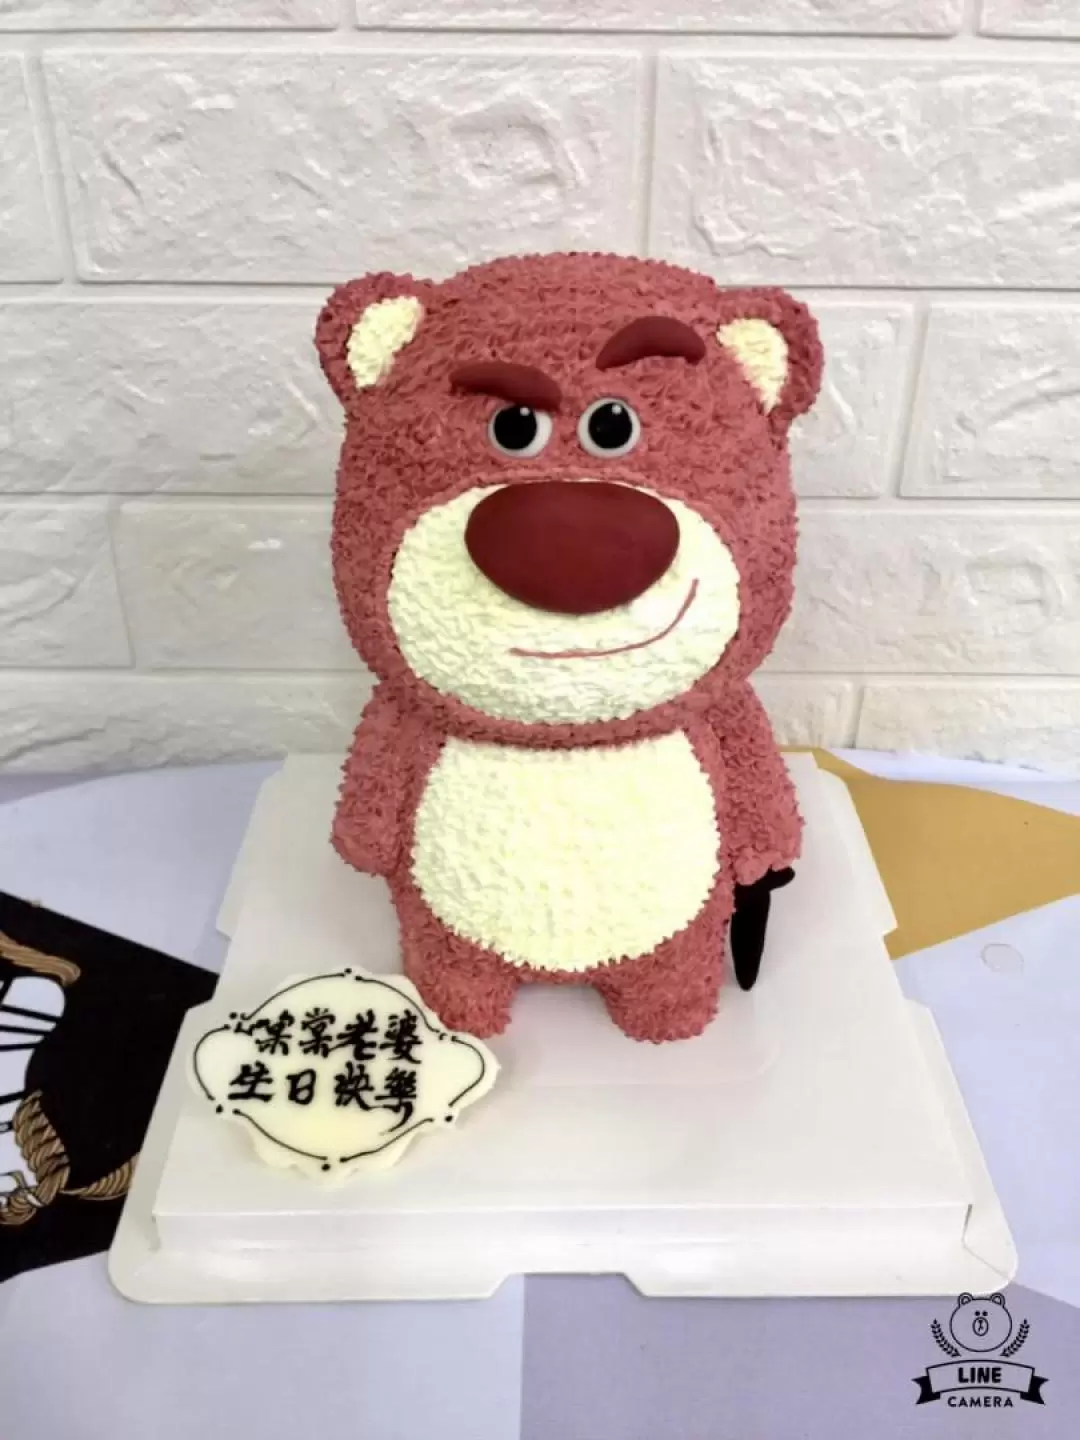 【Klook excusive price】Thepopcake丨Pick up at Kwun Tong丨3D Cake丨Handmade Cartoon Cake